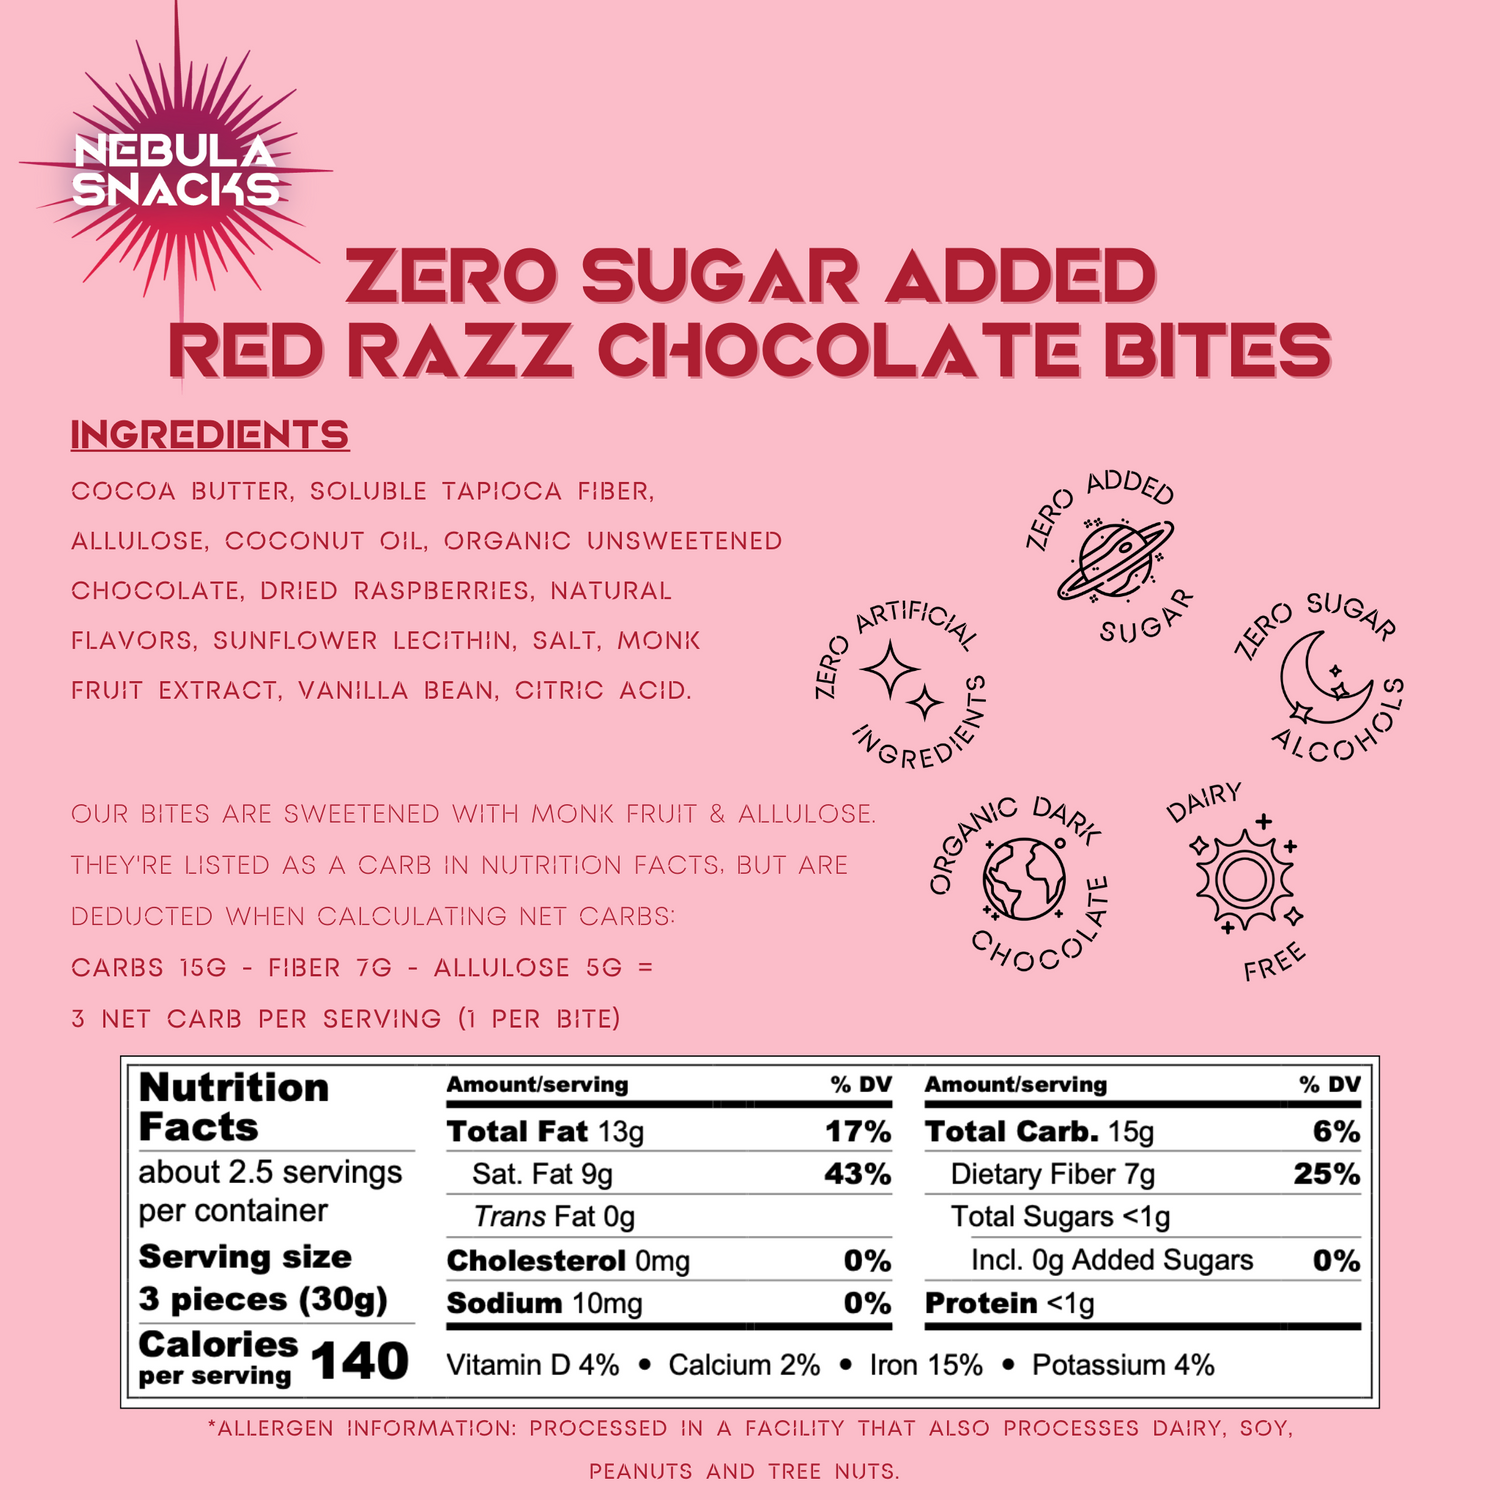 Nebula Snacks - Zero Sugar Added Red Razz Chocolate Bites - Ingredients &amp; Nutrition